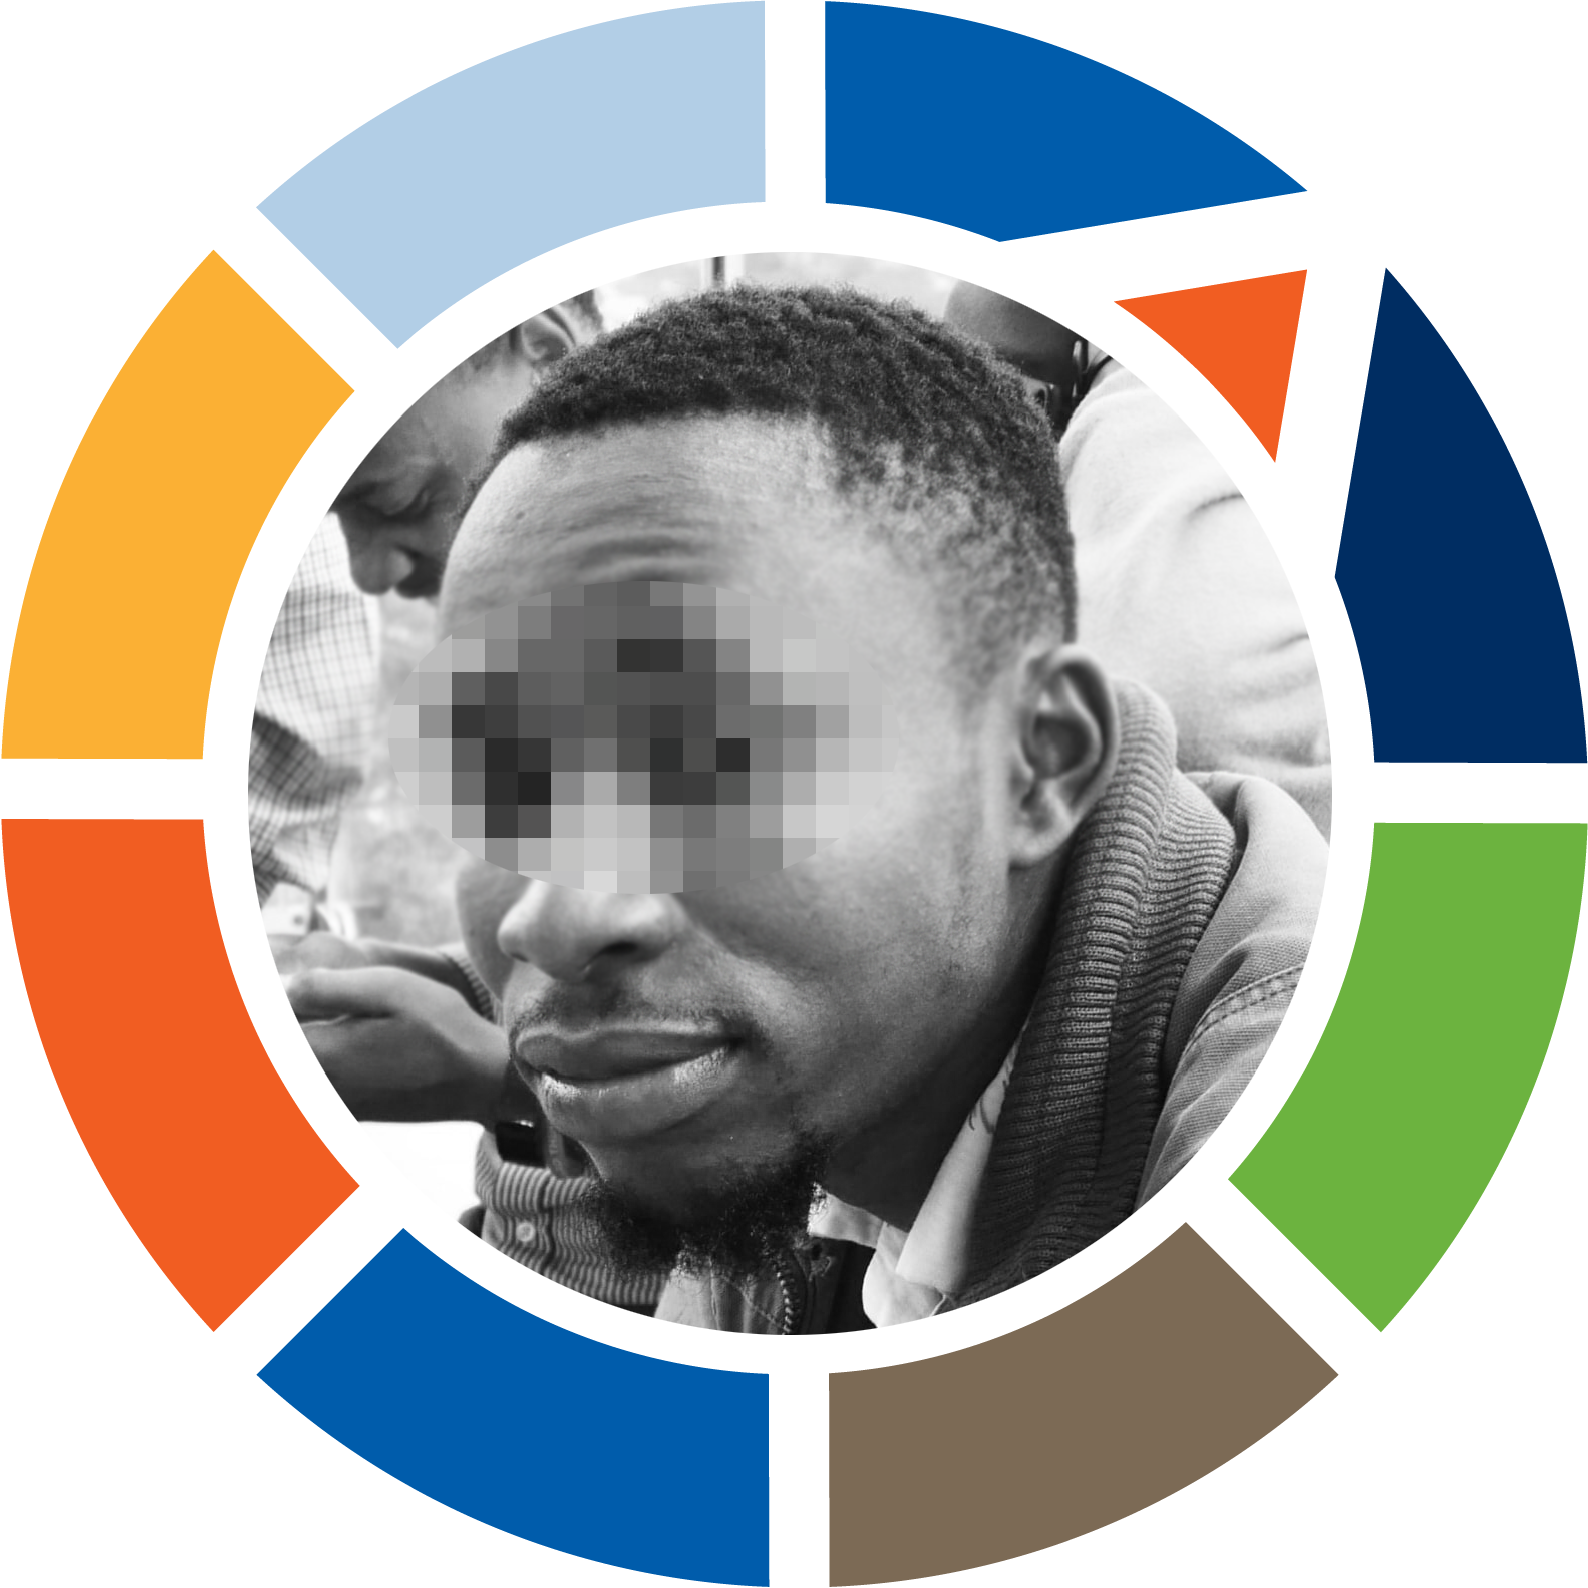 Persona image for Kenya: Denis